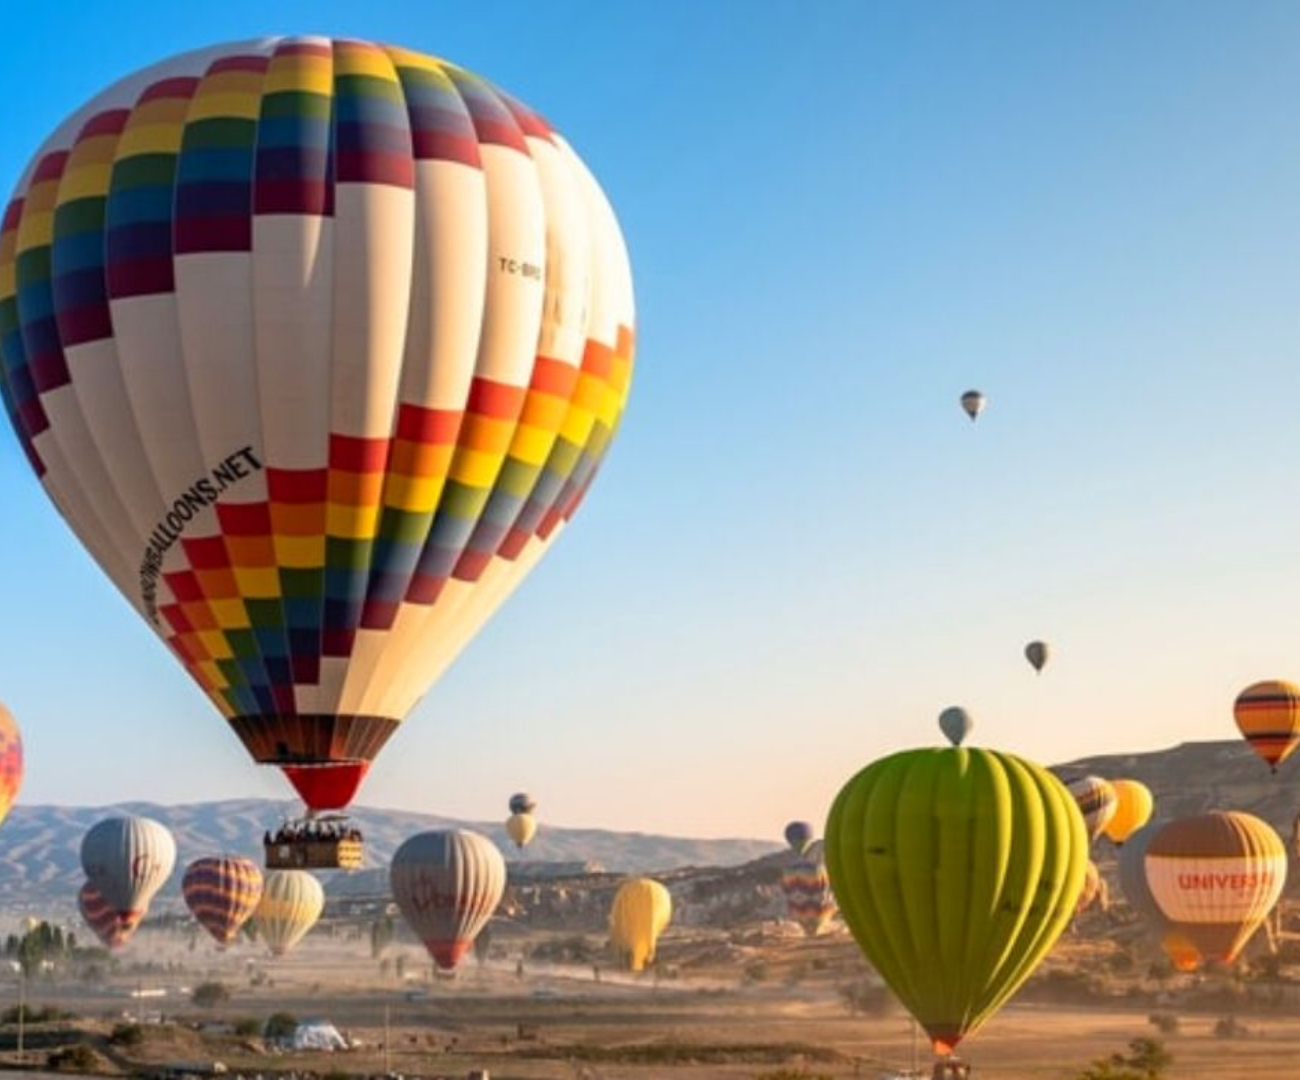 Hot Air Ballooning in Rajasthan